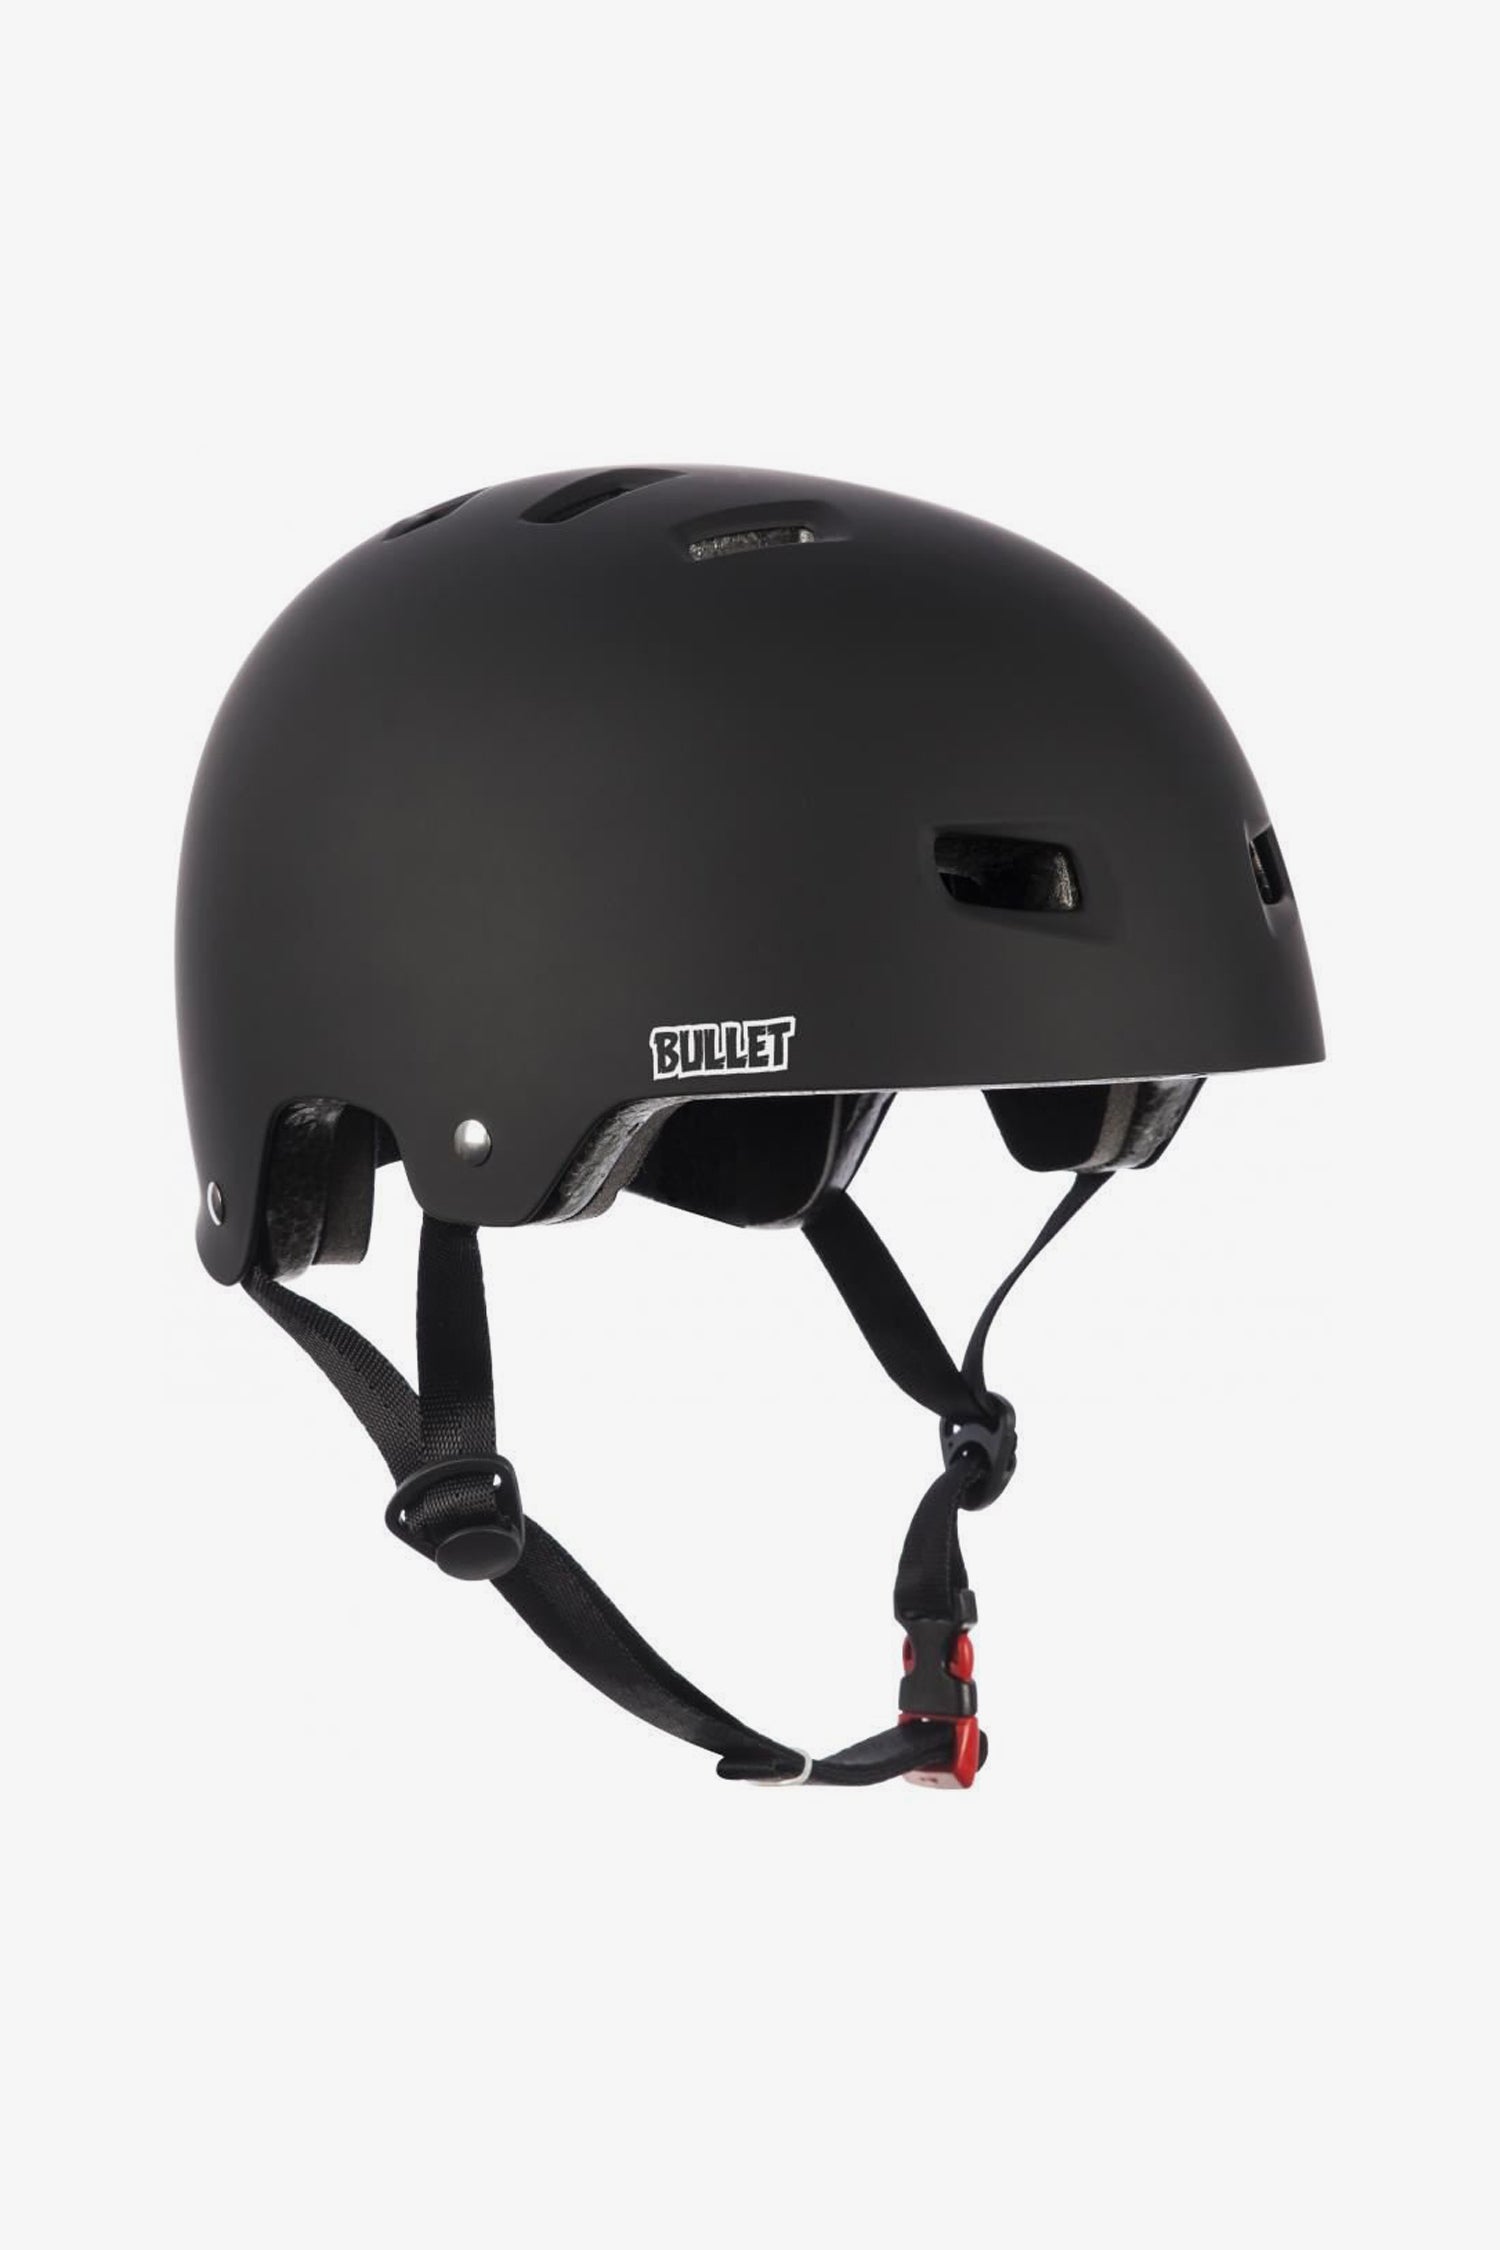 Selectshop FRAME - BULLET Deluxe Helmet Bullet Protective Gear Dubai